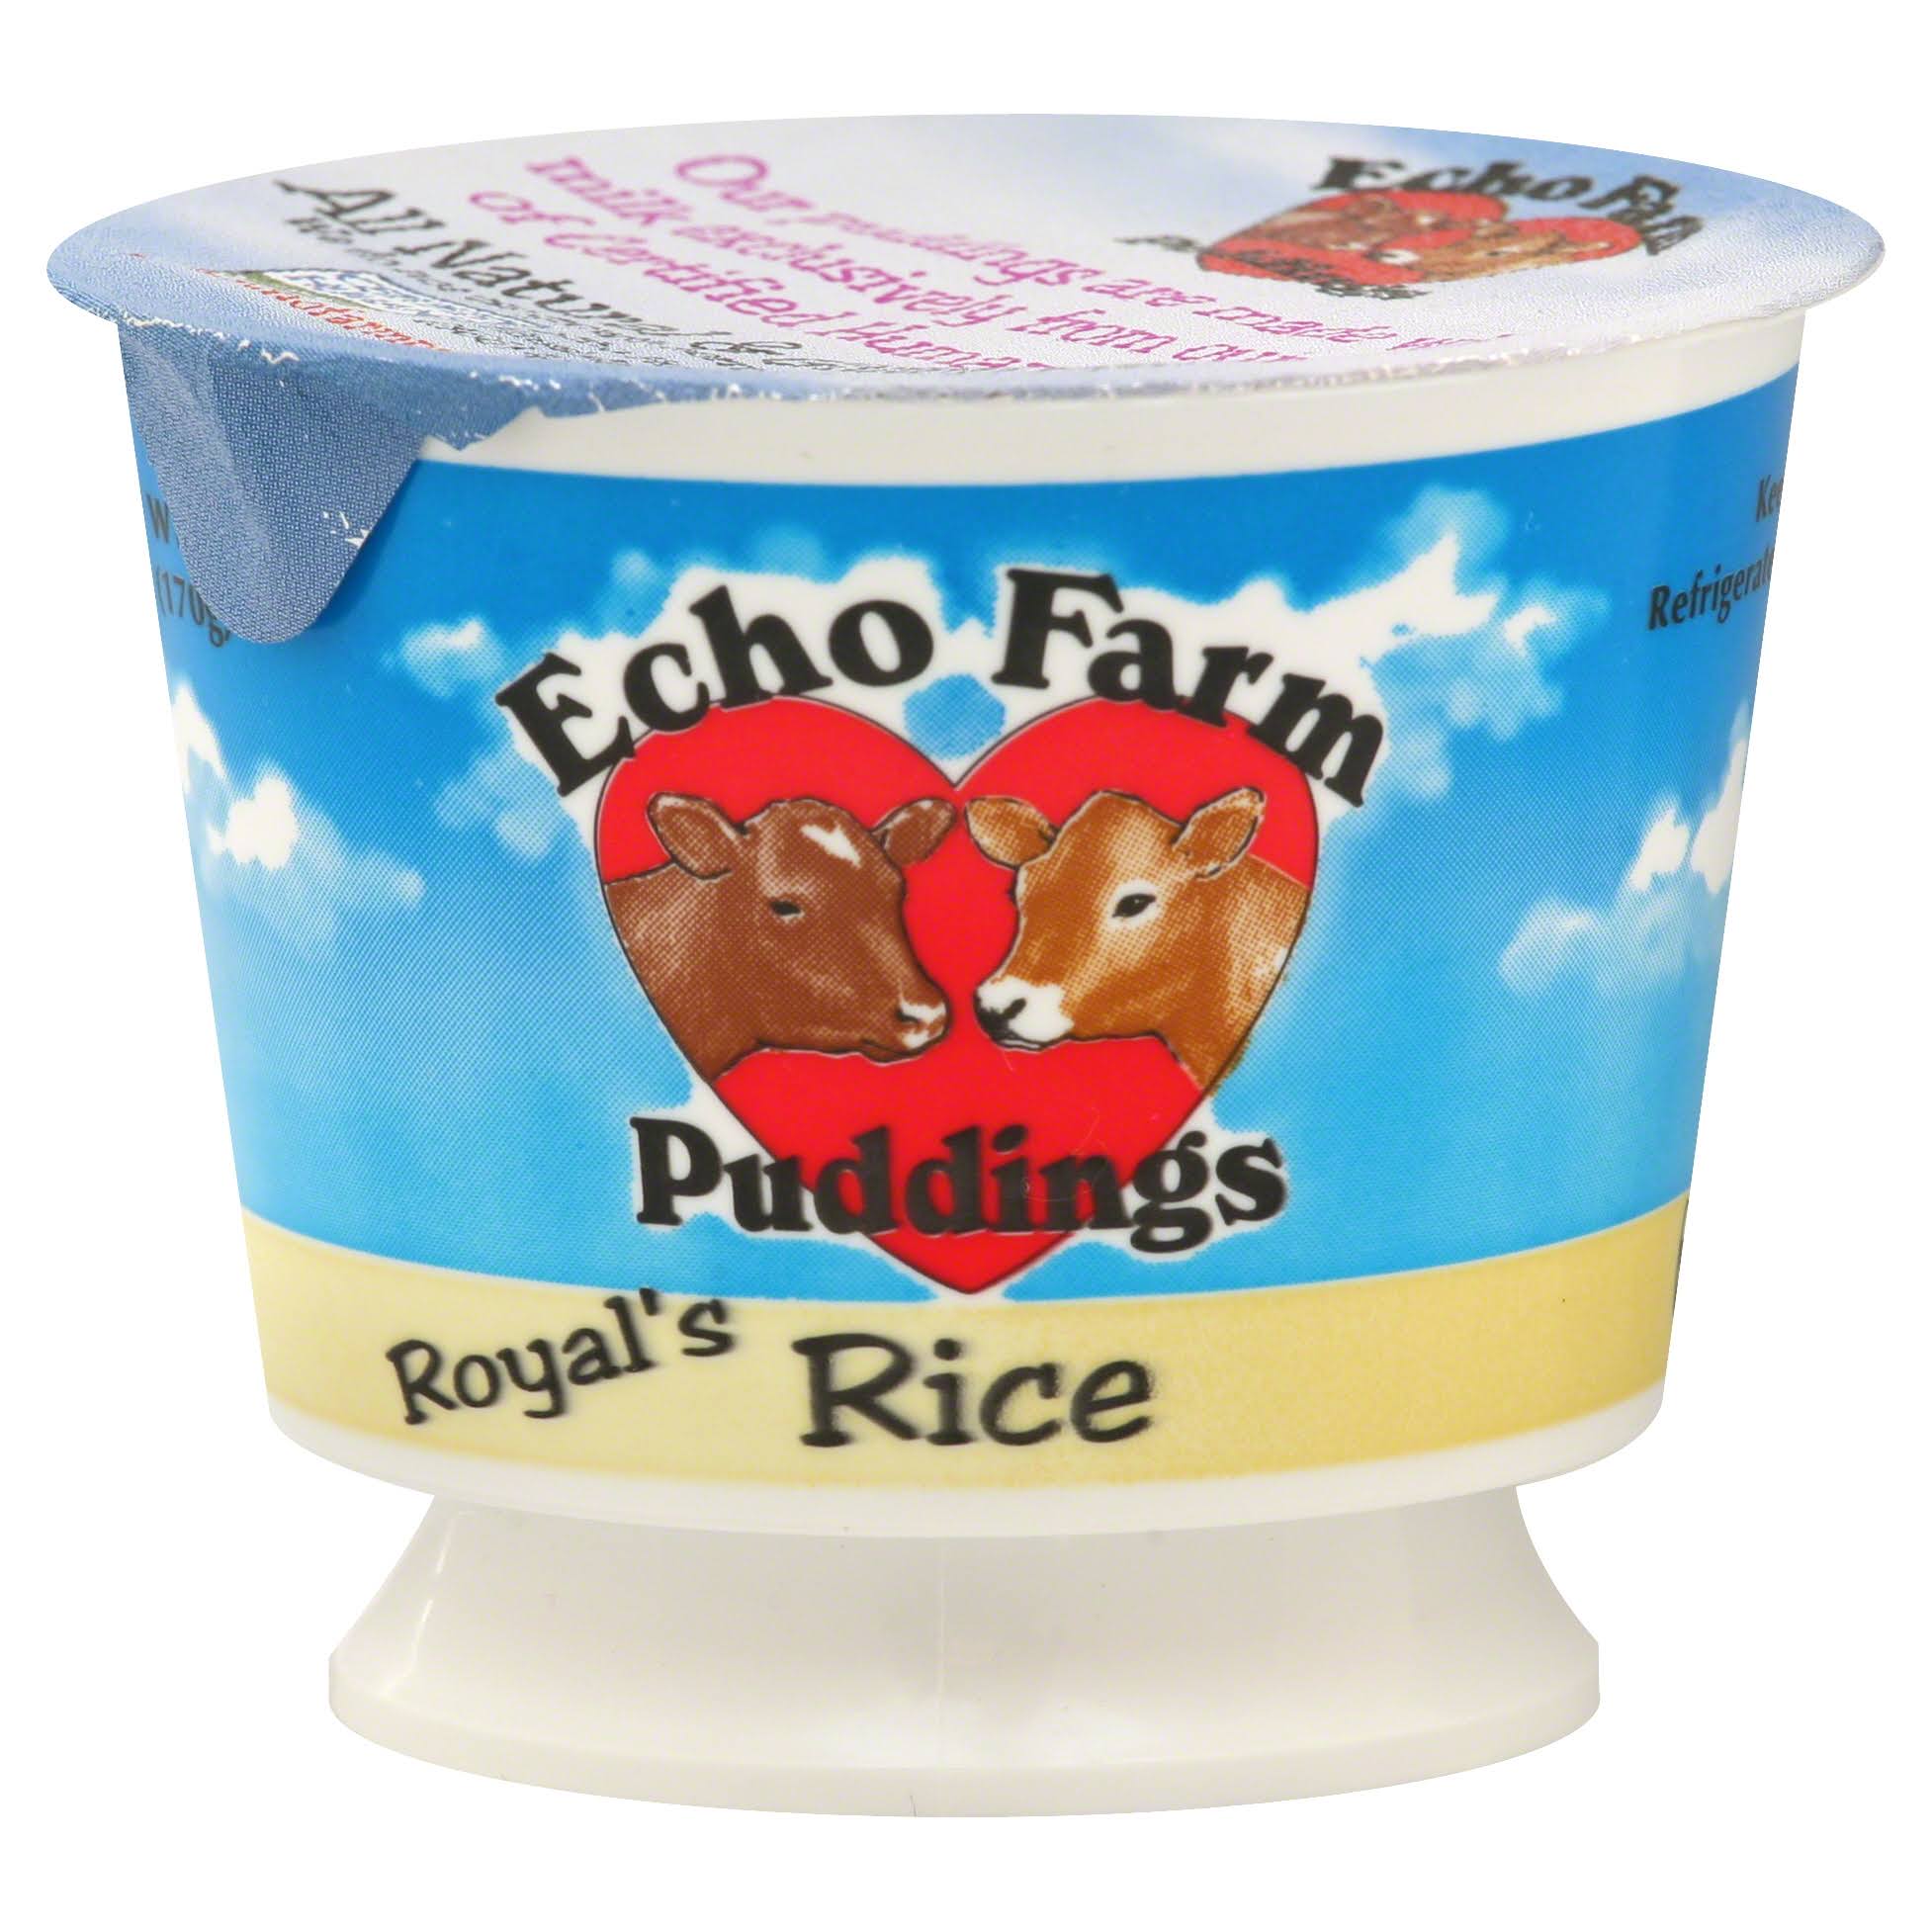 Echo Farm Pudding, Royal's Rice - 6 oz